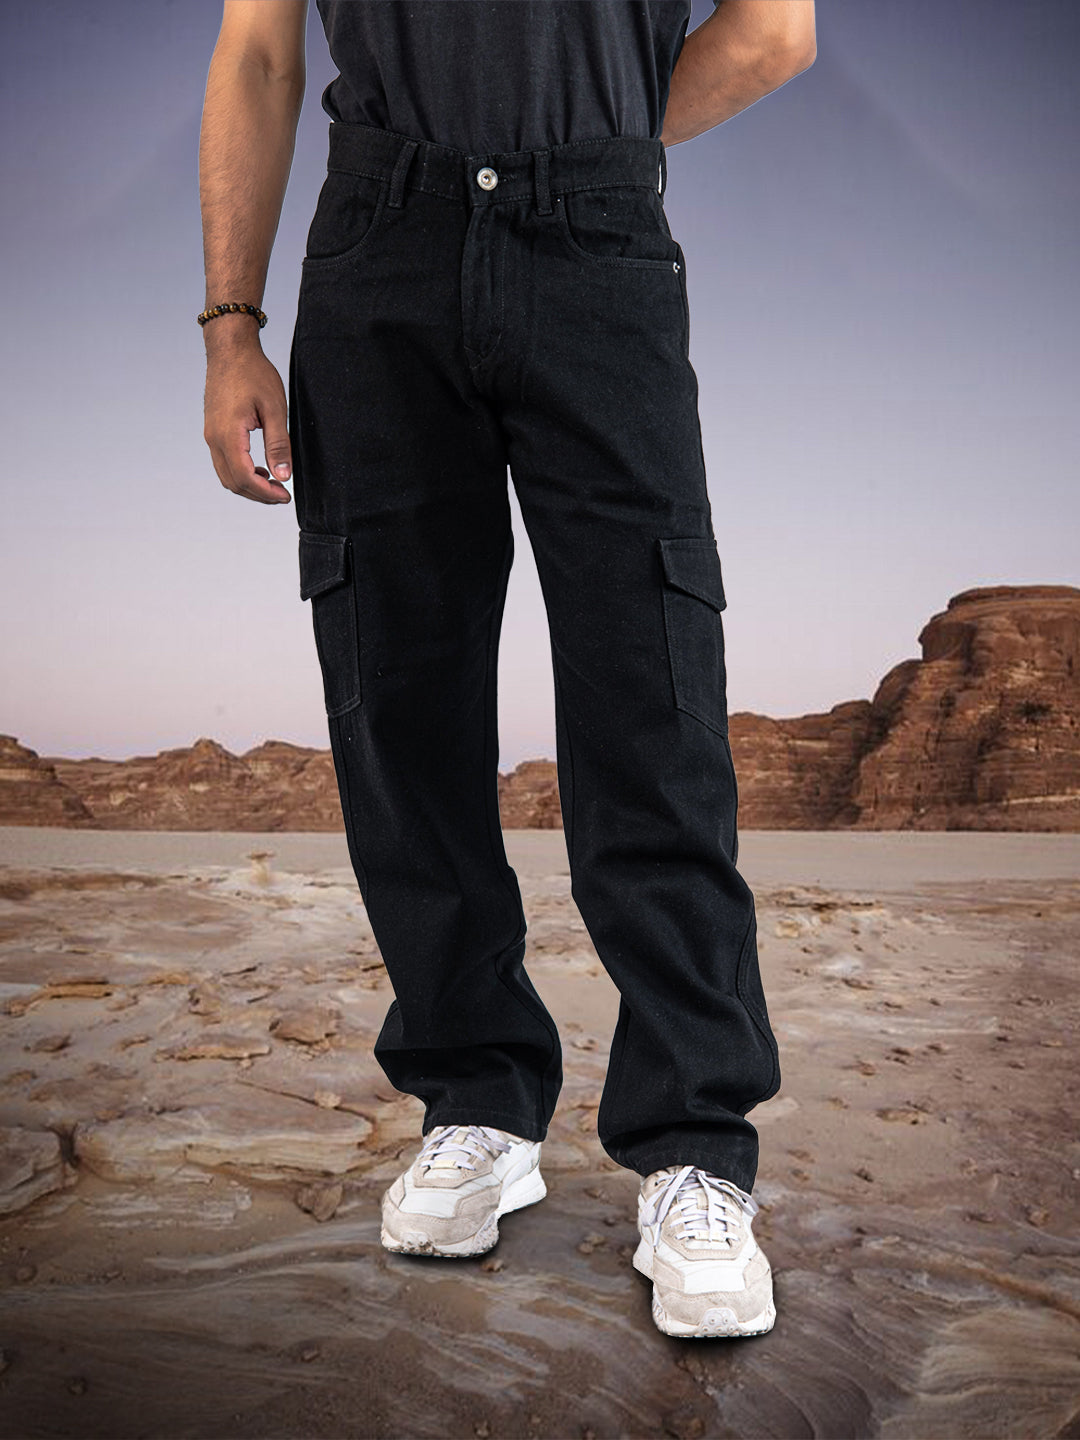 Jet Black Straight Fit Men's Cargo Denim Jeans